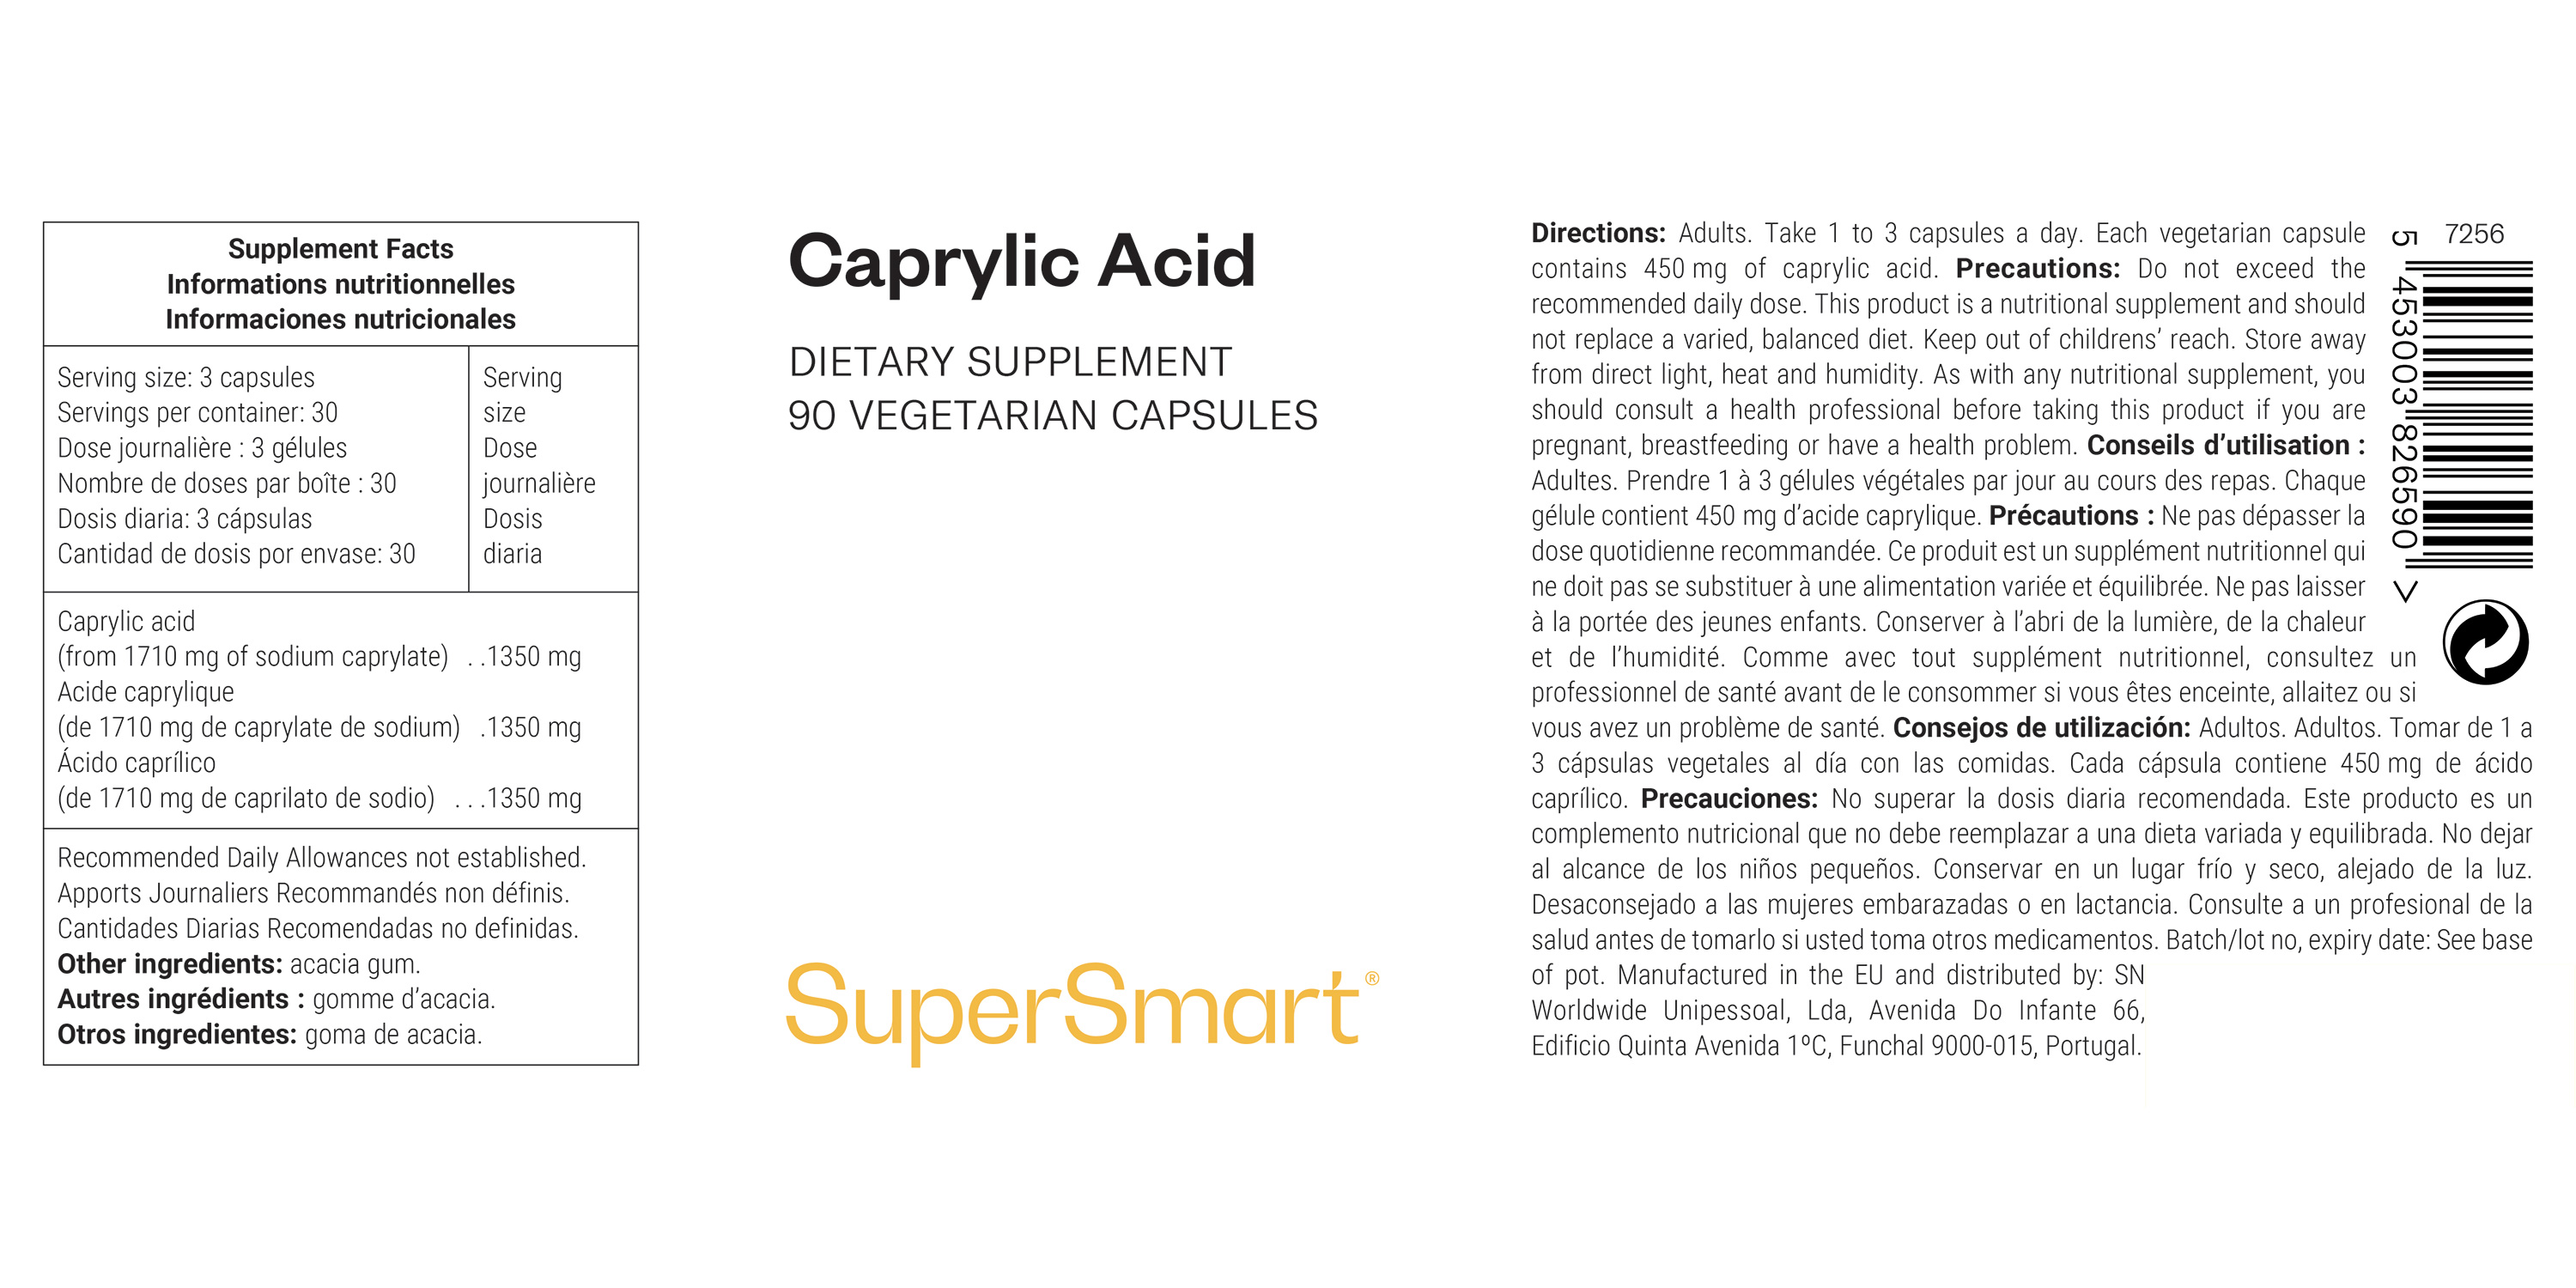 Caprylic Acid 